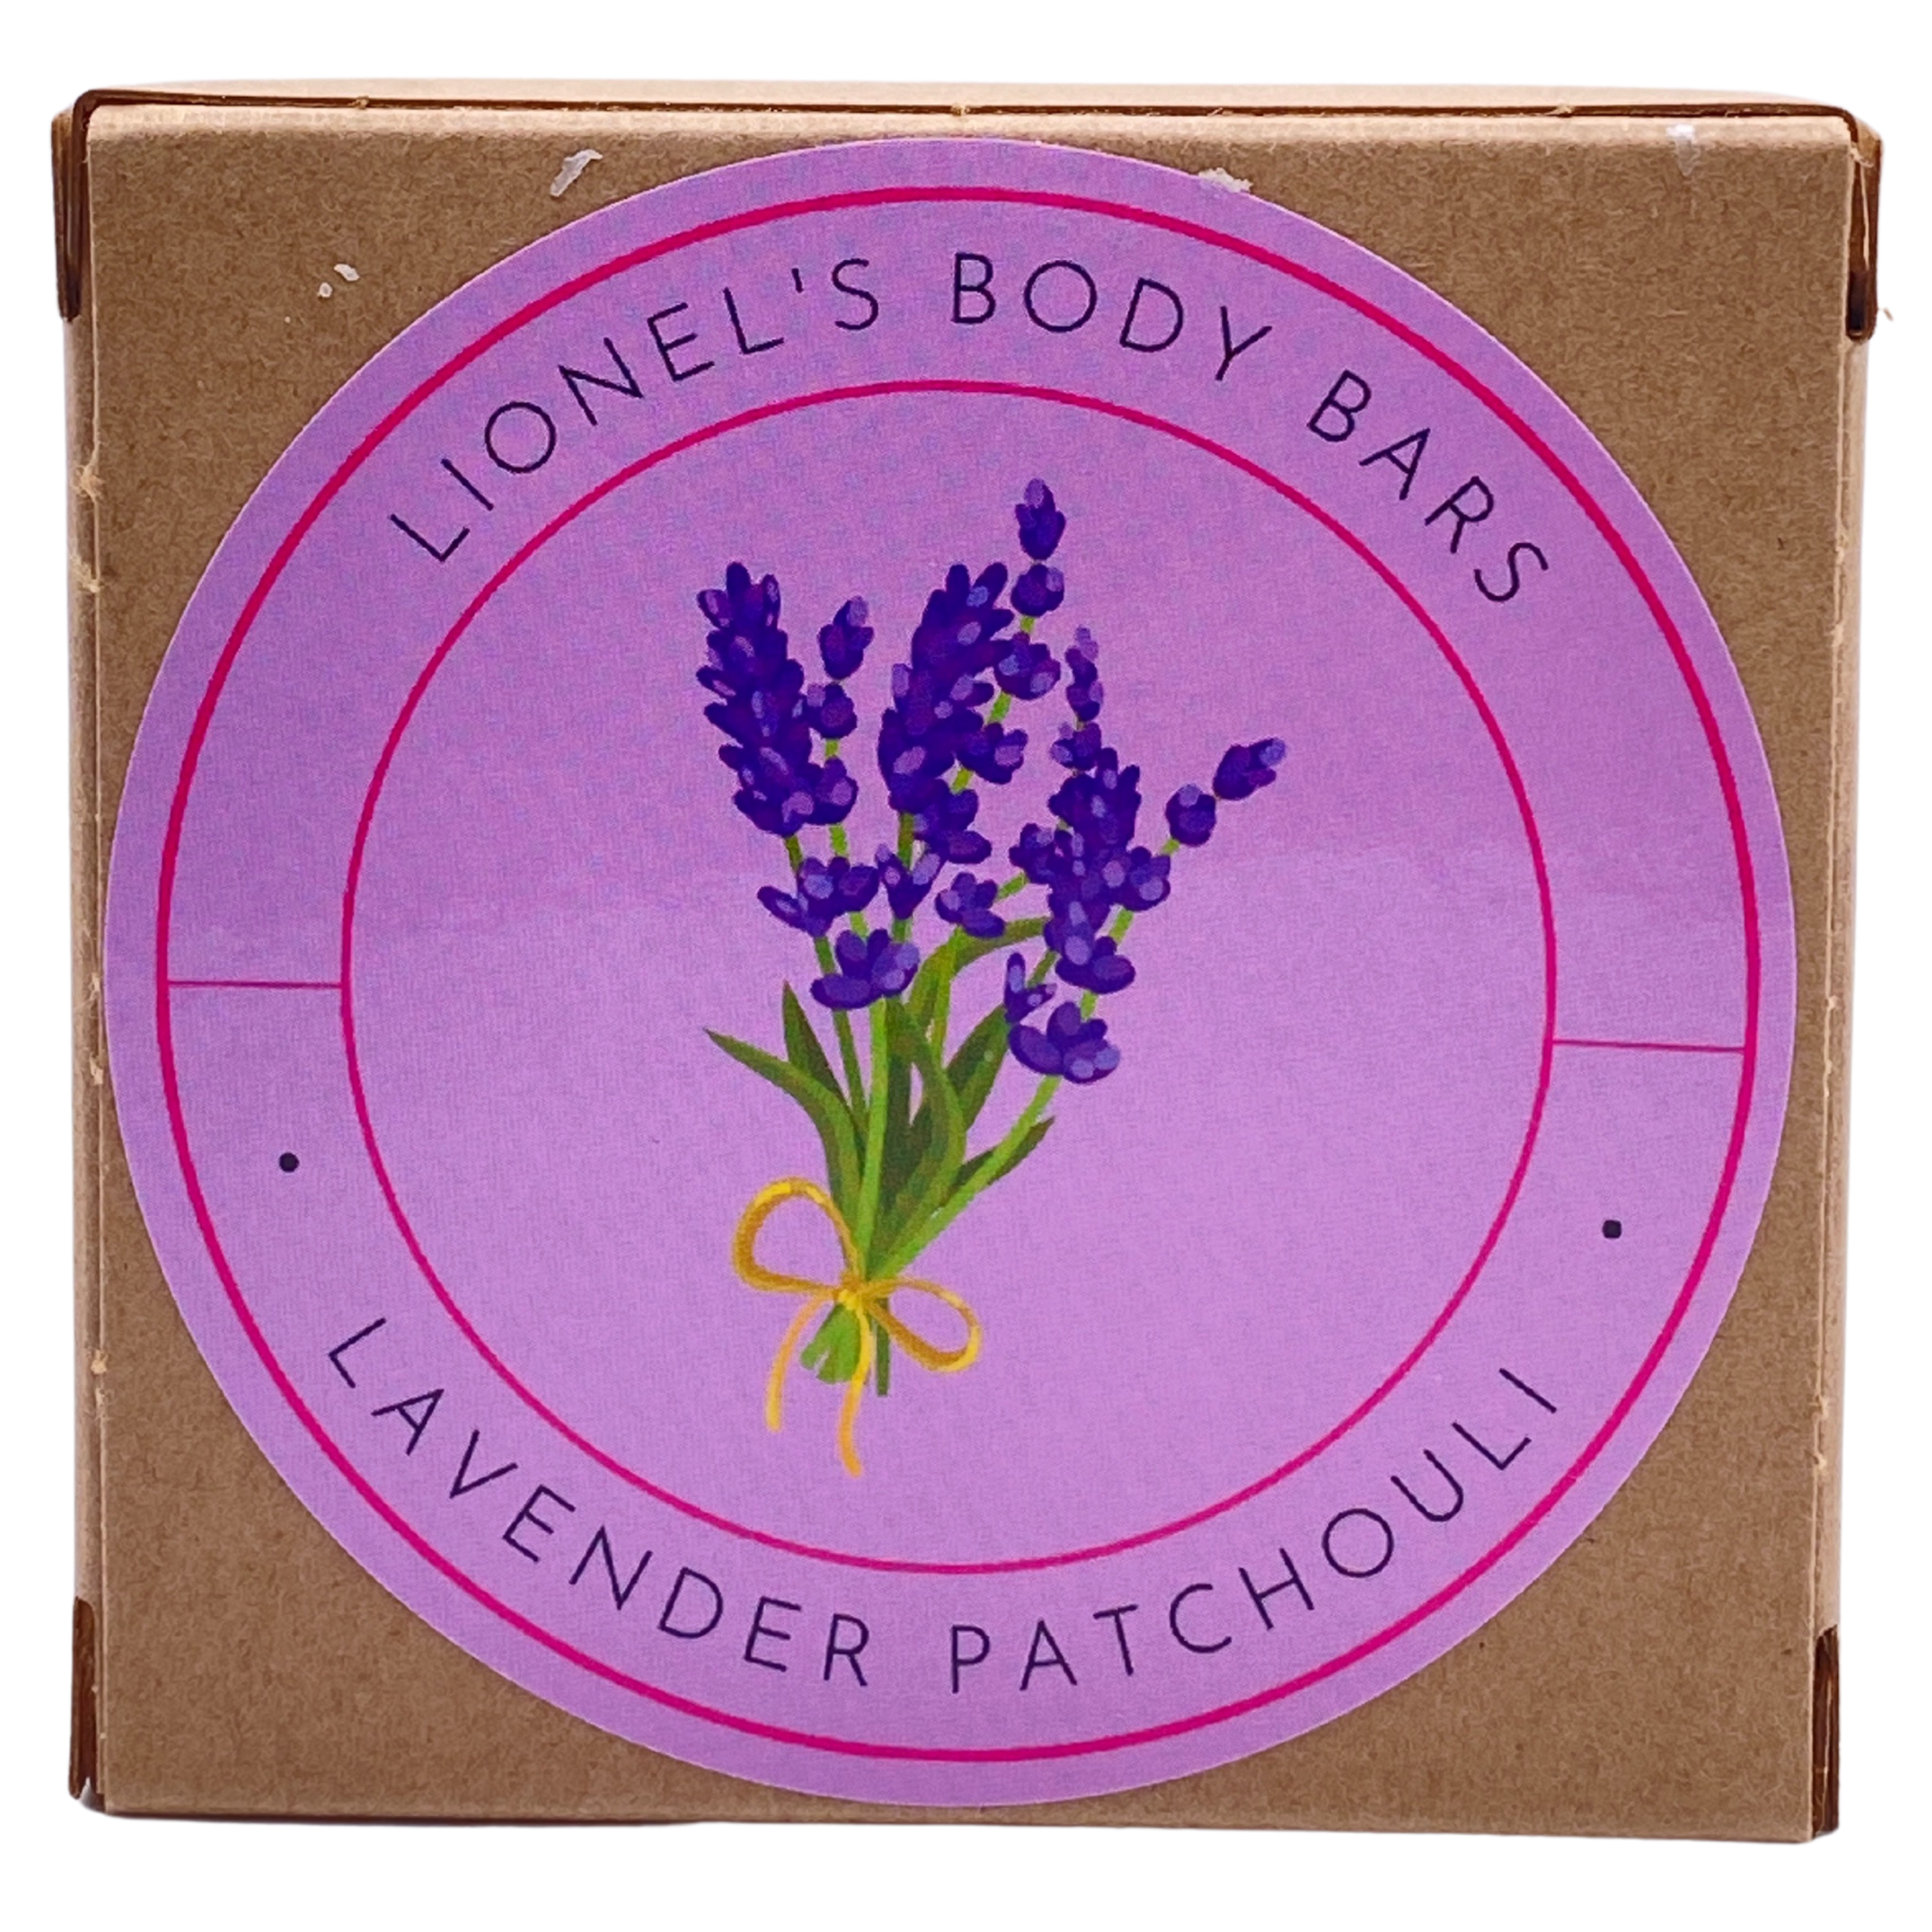 Lavender Patchouli Body Bar